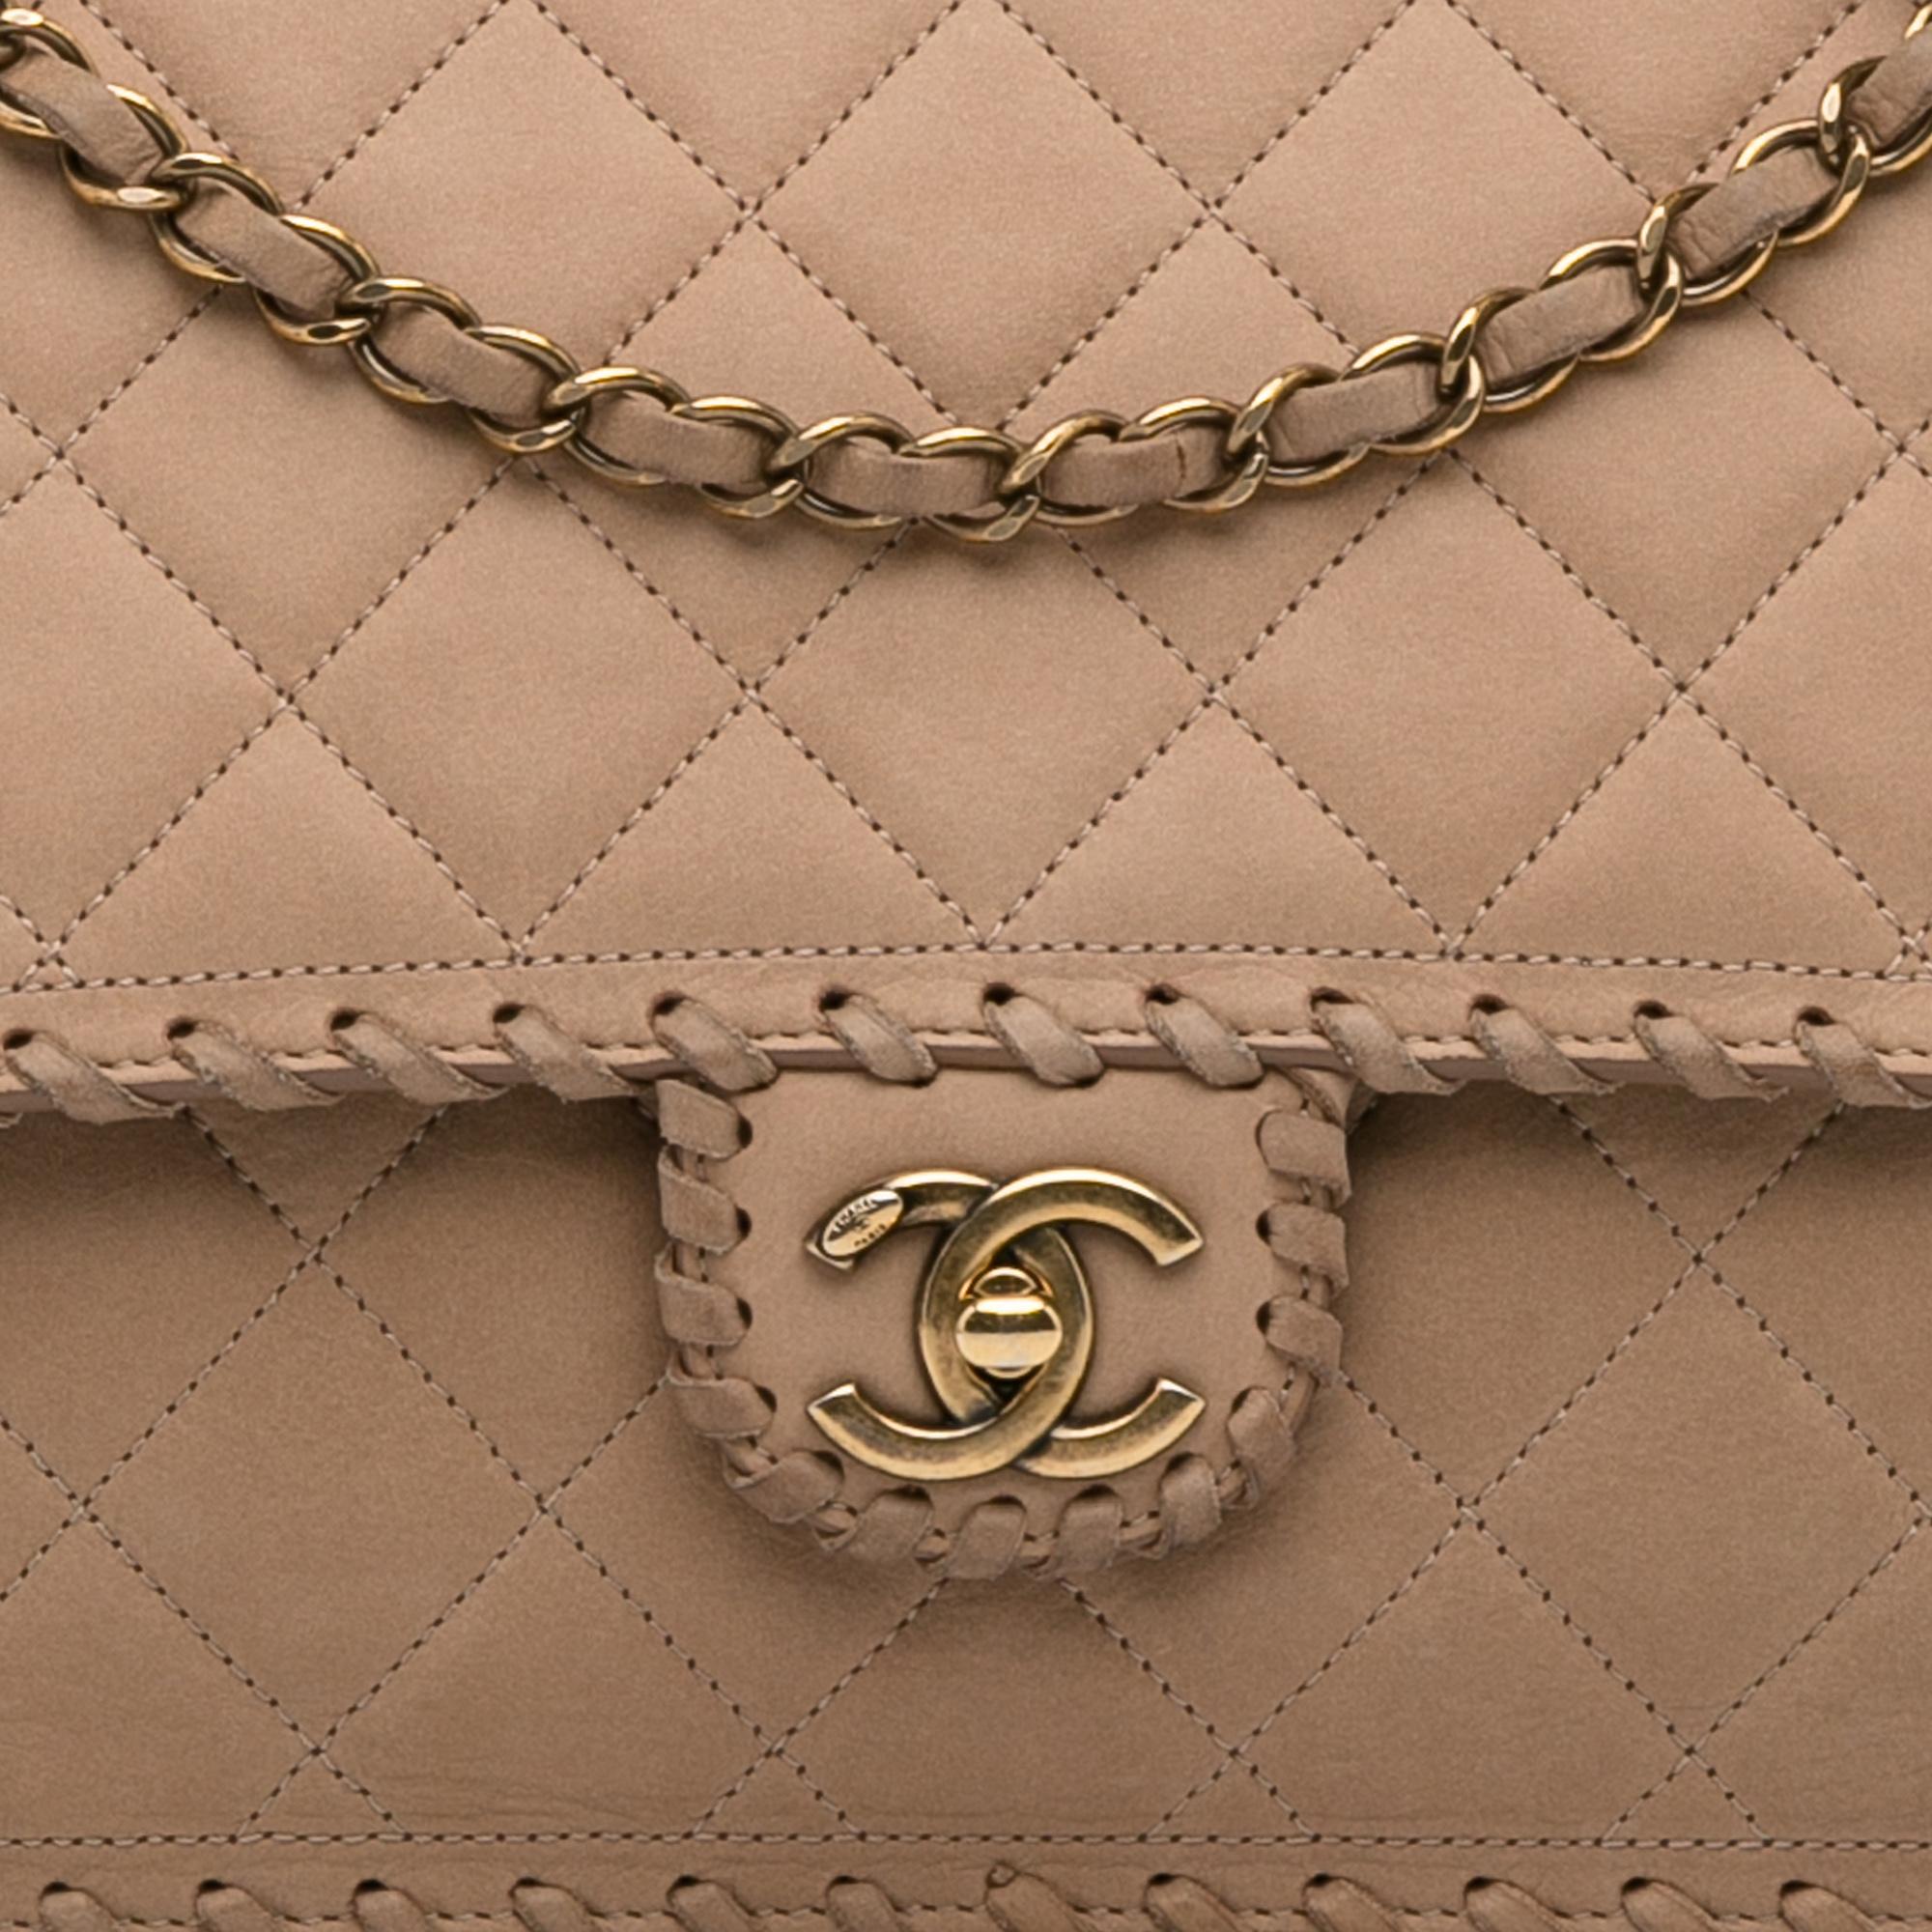 Chanel Beige Jumbo Suede Happy Stitch Flap Bag